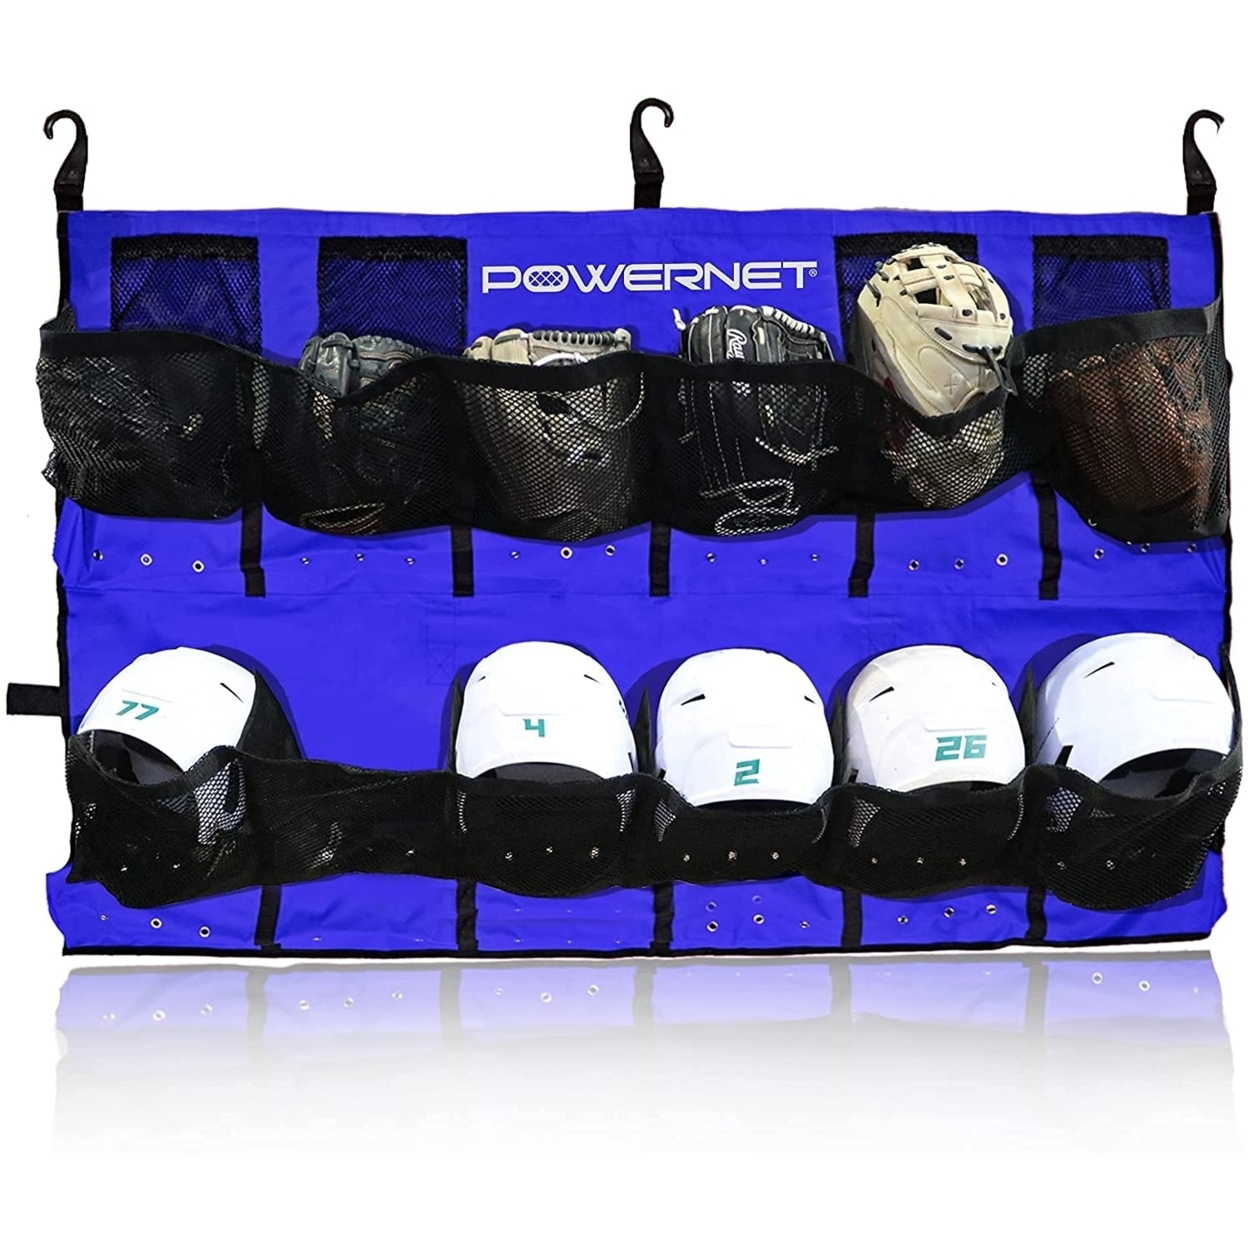 PowerNet PowerPro Hanging Helmet Organizer Bag With Roll-Up Portability (1168) - Black